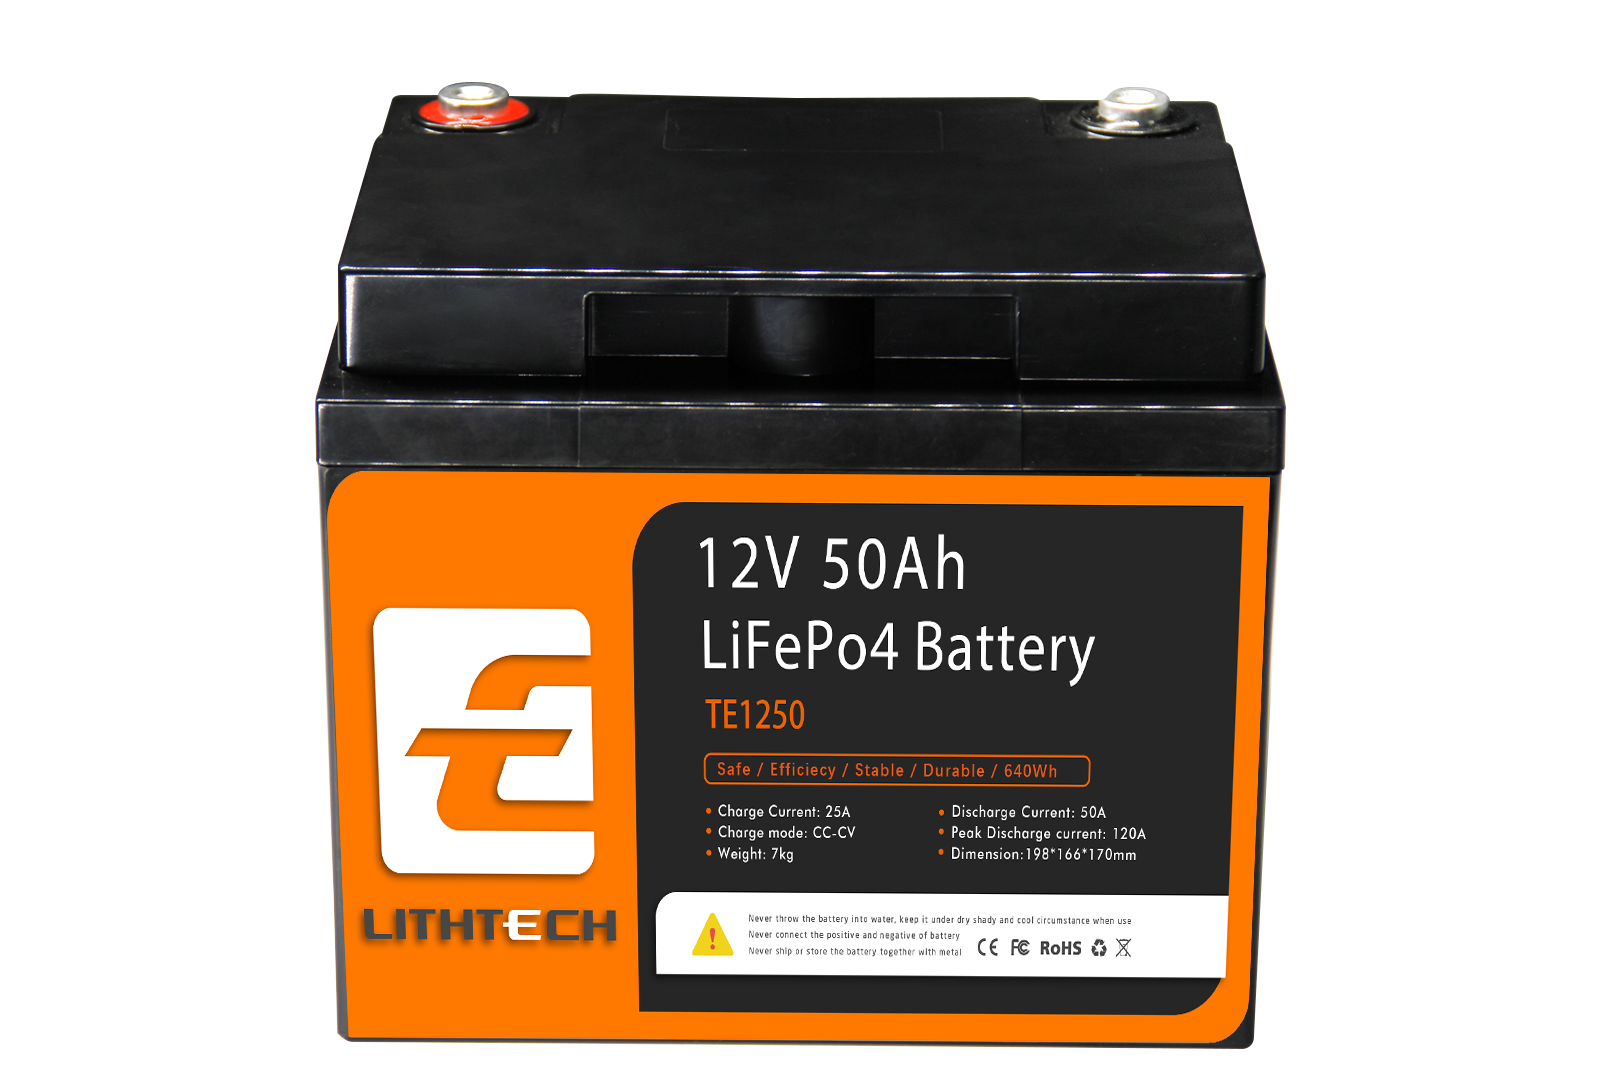 Lithtech TE1250 12.8v 50 Ah LIFEPO4 Lithium Ion Battery - Buy 12v